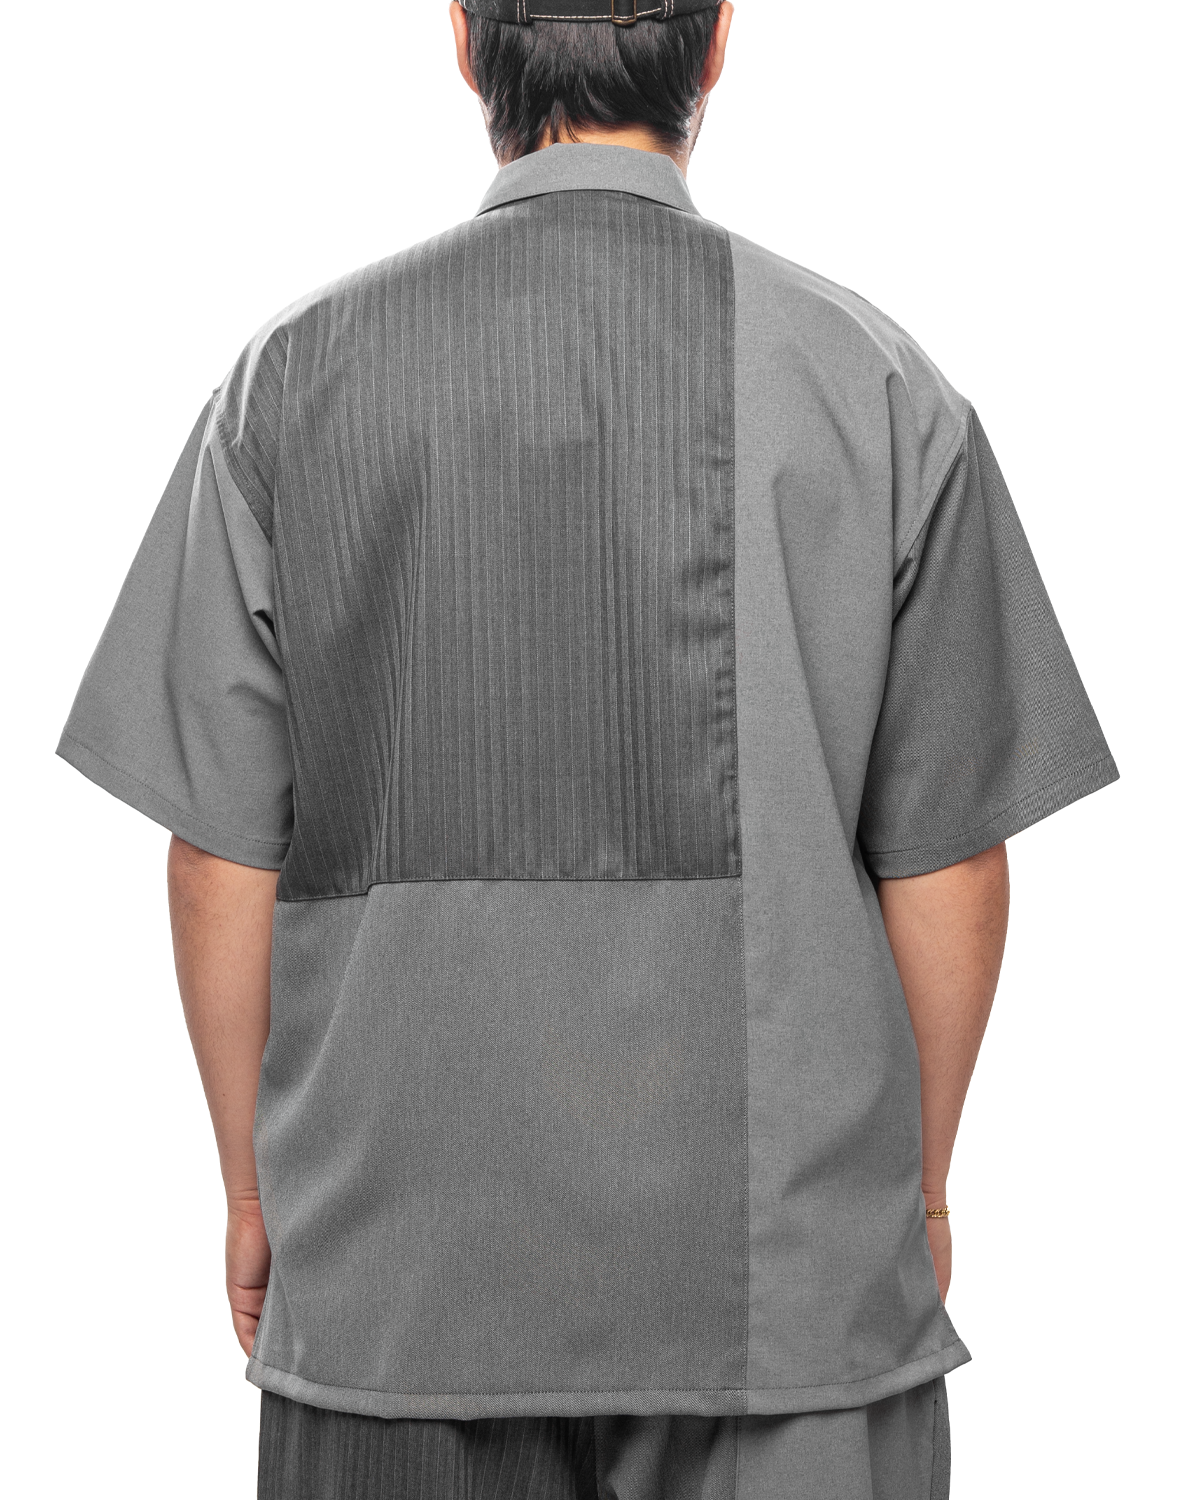 OC S/S Shirt Grey